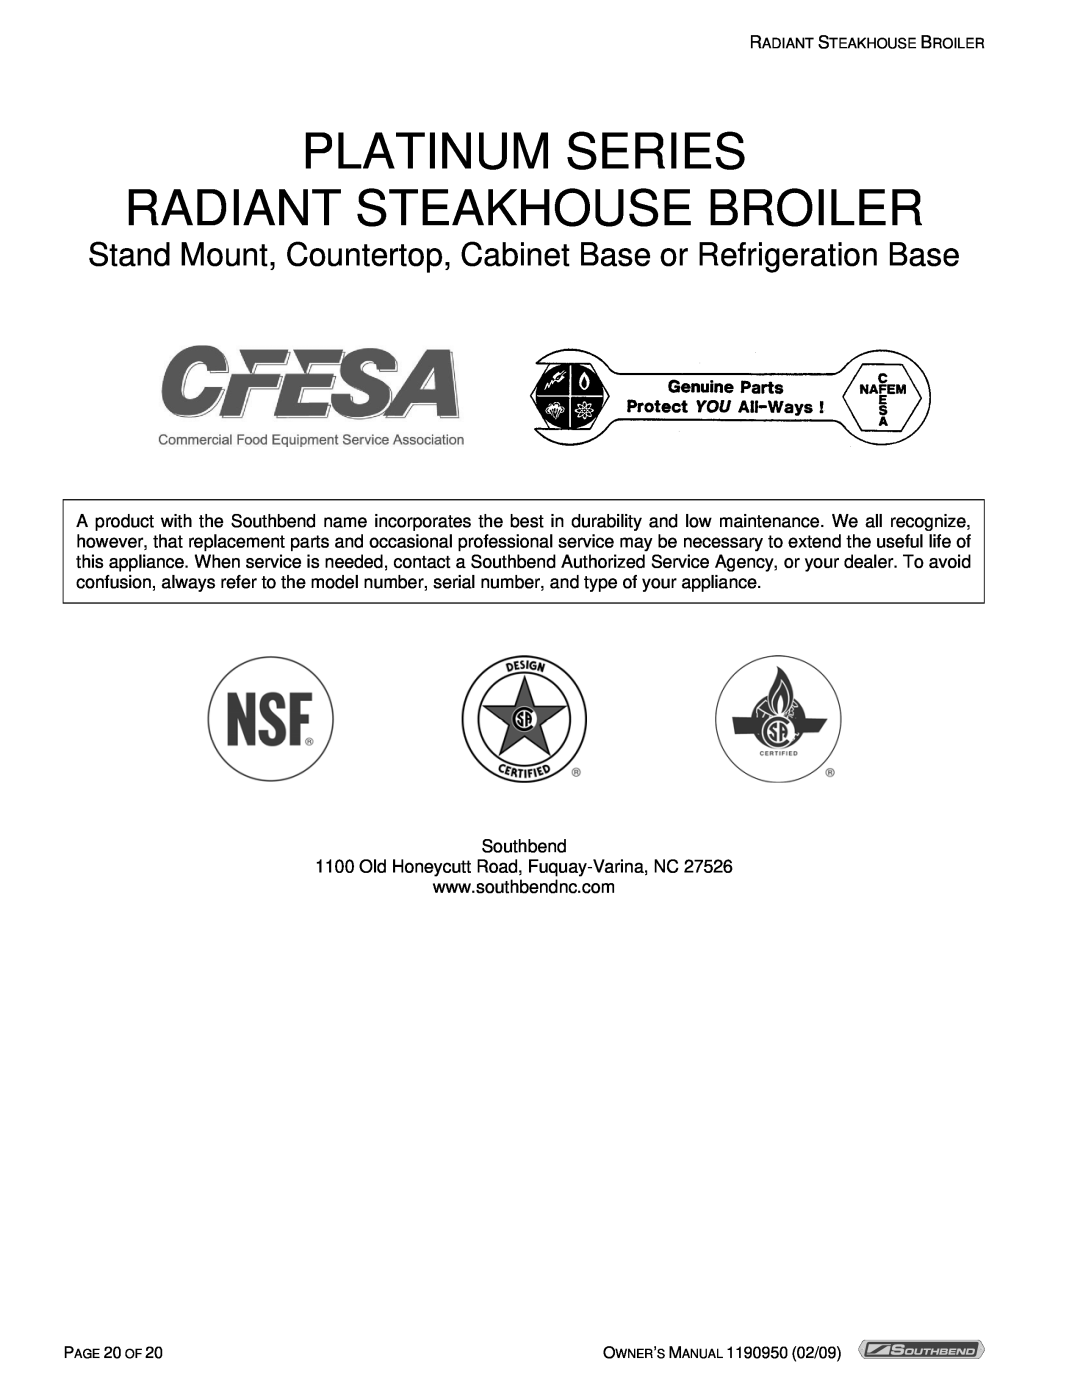 Southbend SSB-36 Platinum Series Radiant Steakhouse Broiler, Stand Mount, Countertop, Cabinet Base or Refrigeration Base 